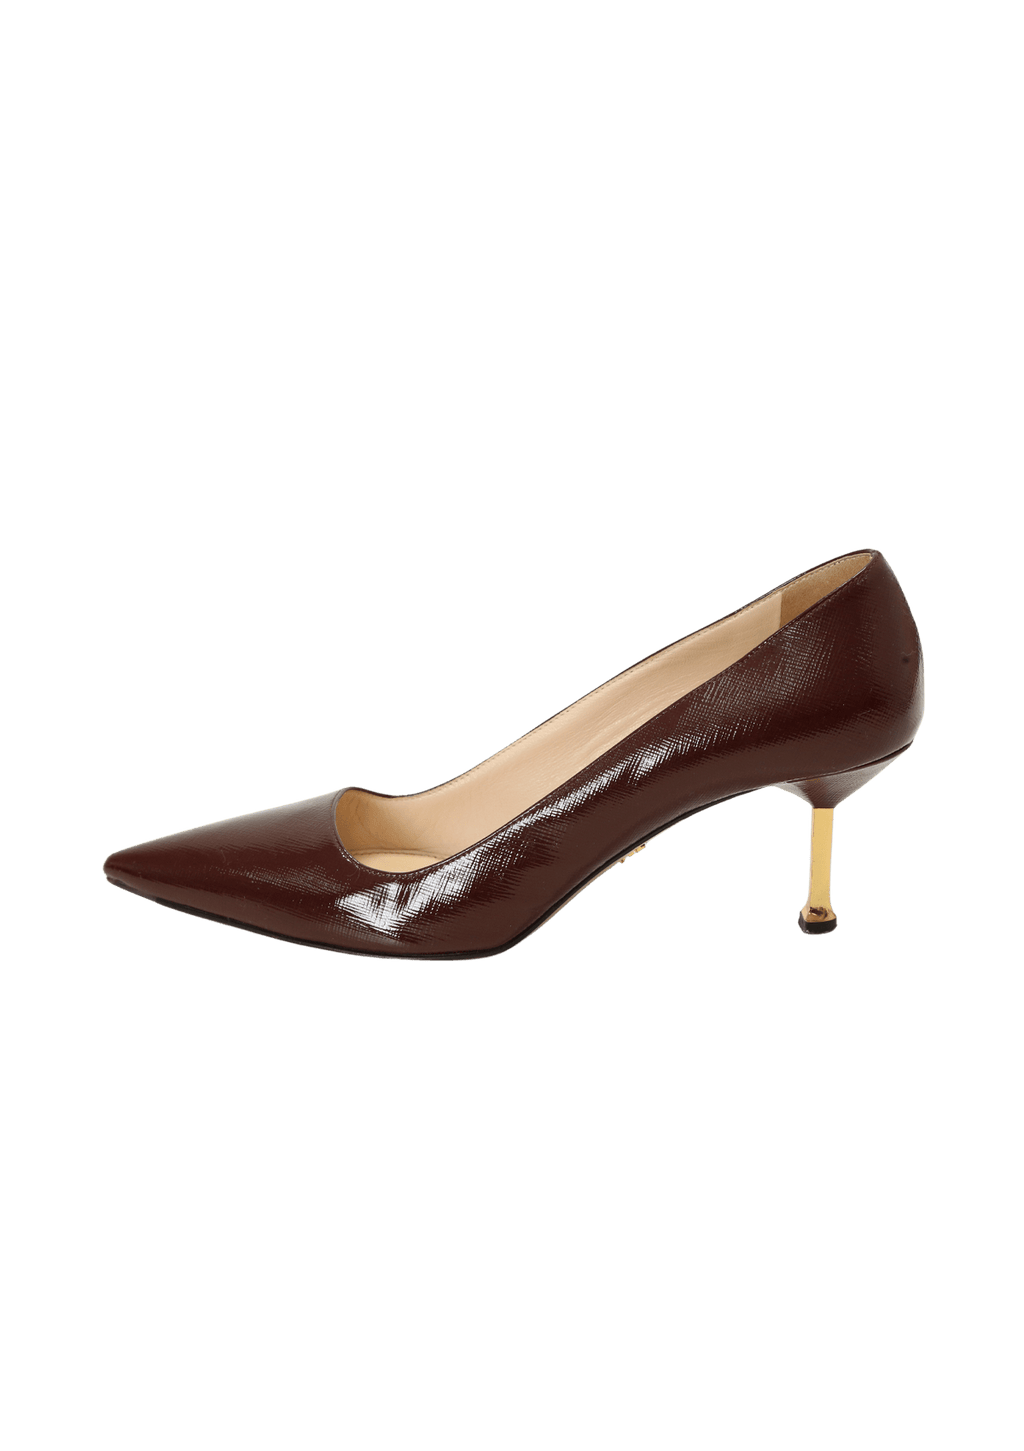 Dream Pairs Women Comfort Pumps Low Chunky Heel Close Toe Classic Pump  Shoes | eBay